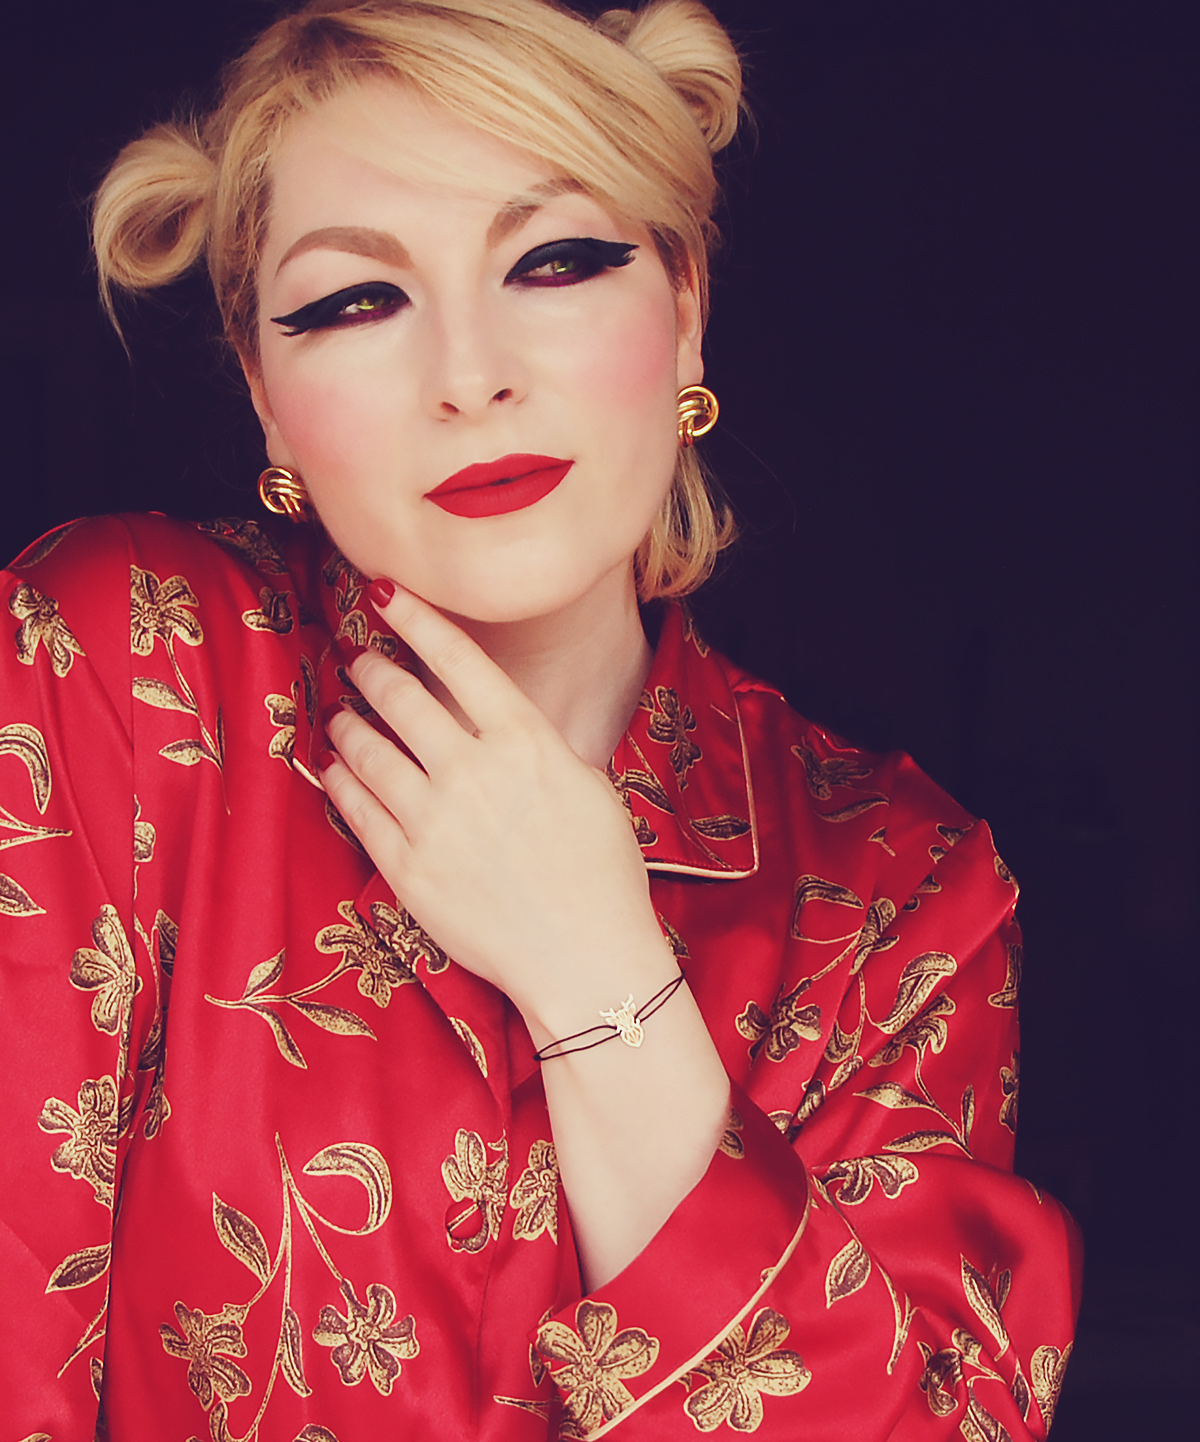 Iona Jewelry, bratara cu snur Cervus, festival look, red kimono, stag jewelry, eyeliner look, red lips, modern geisha look, vintage earrings